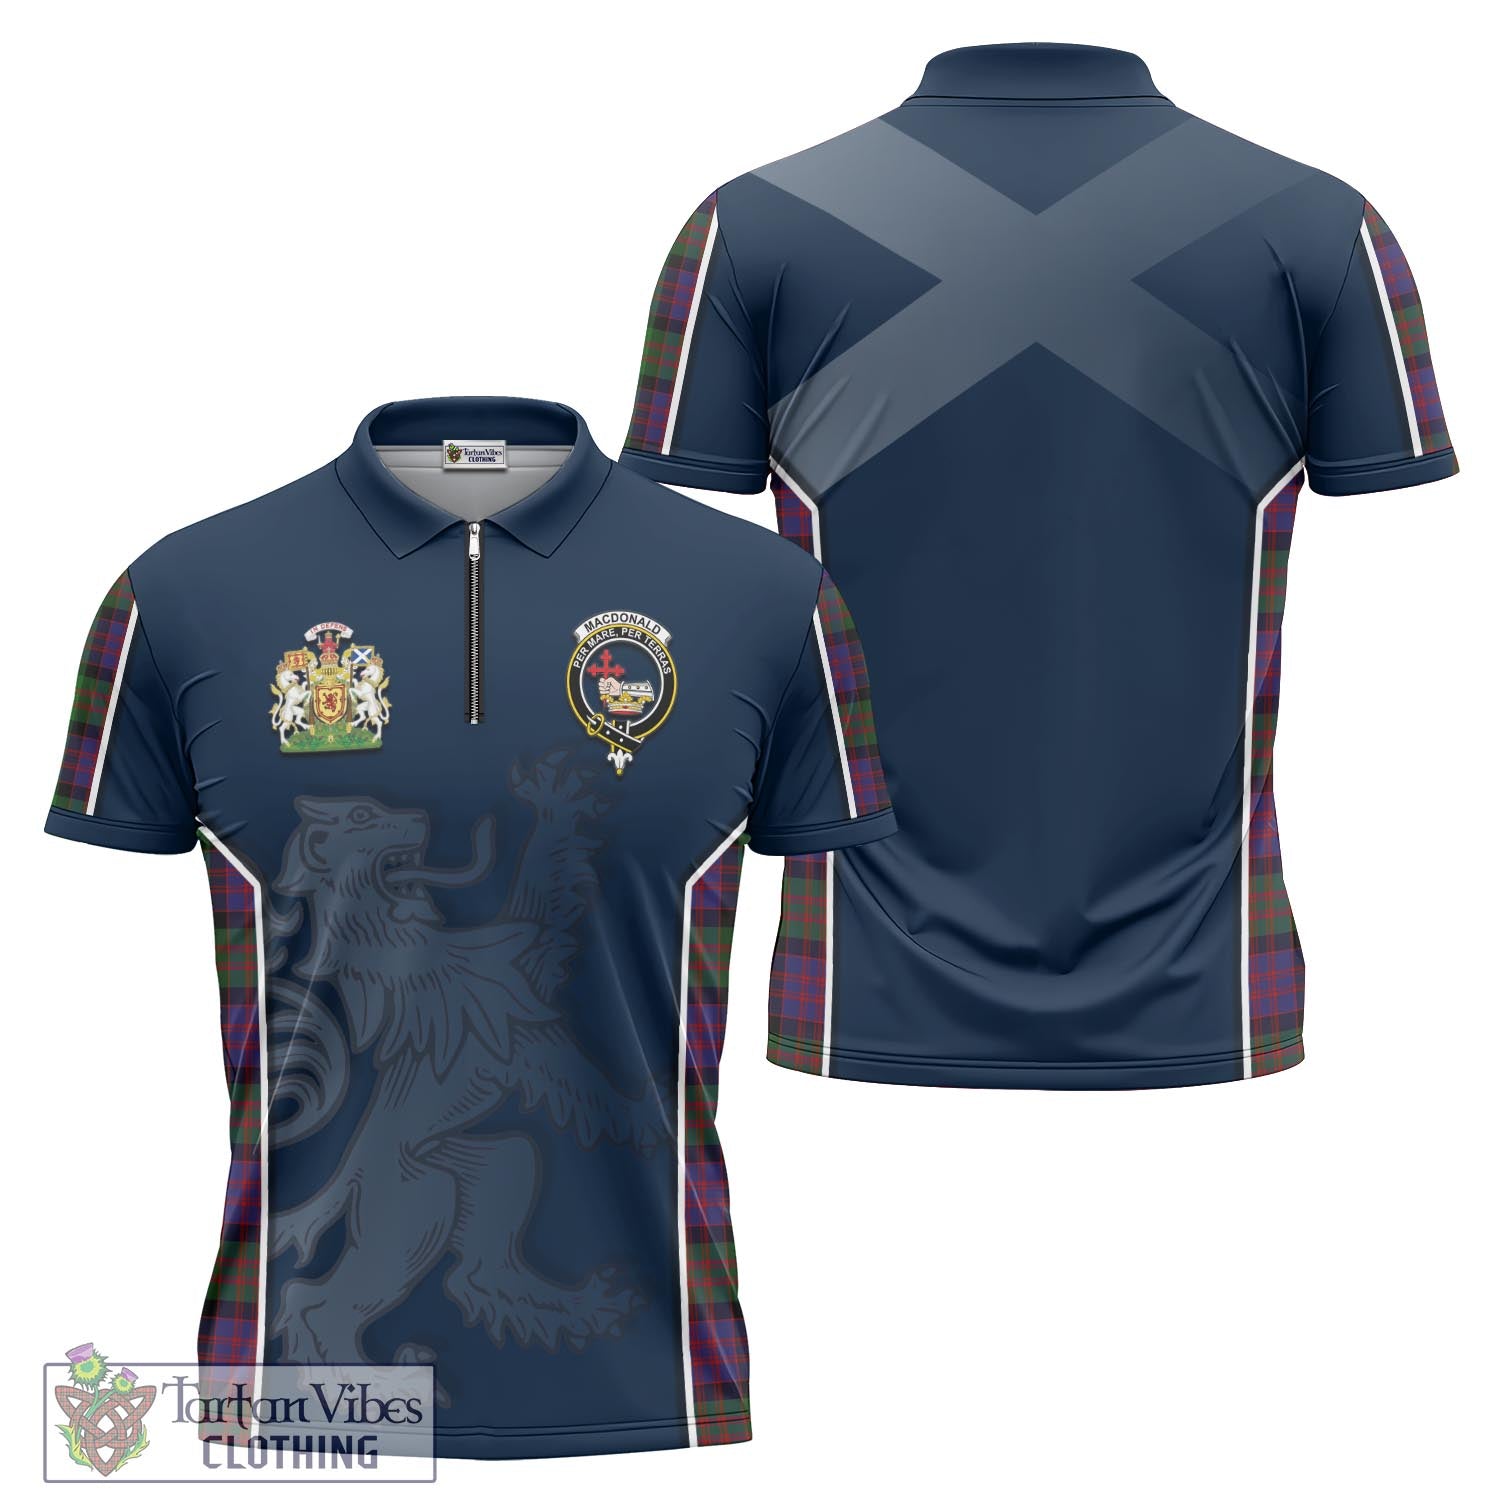 Tartan Vibes Clothing MacDonald Tartan Zipper Polo Shirt with Family Crest and Lion Rampant Vibes Sport Style